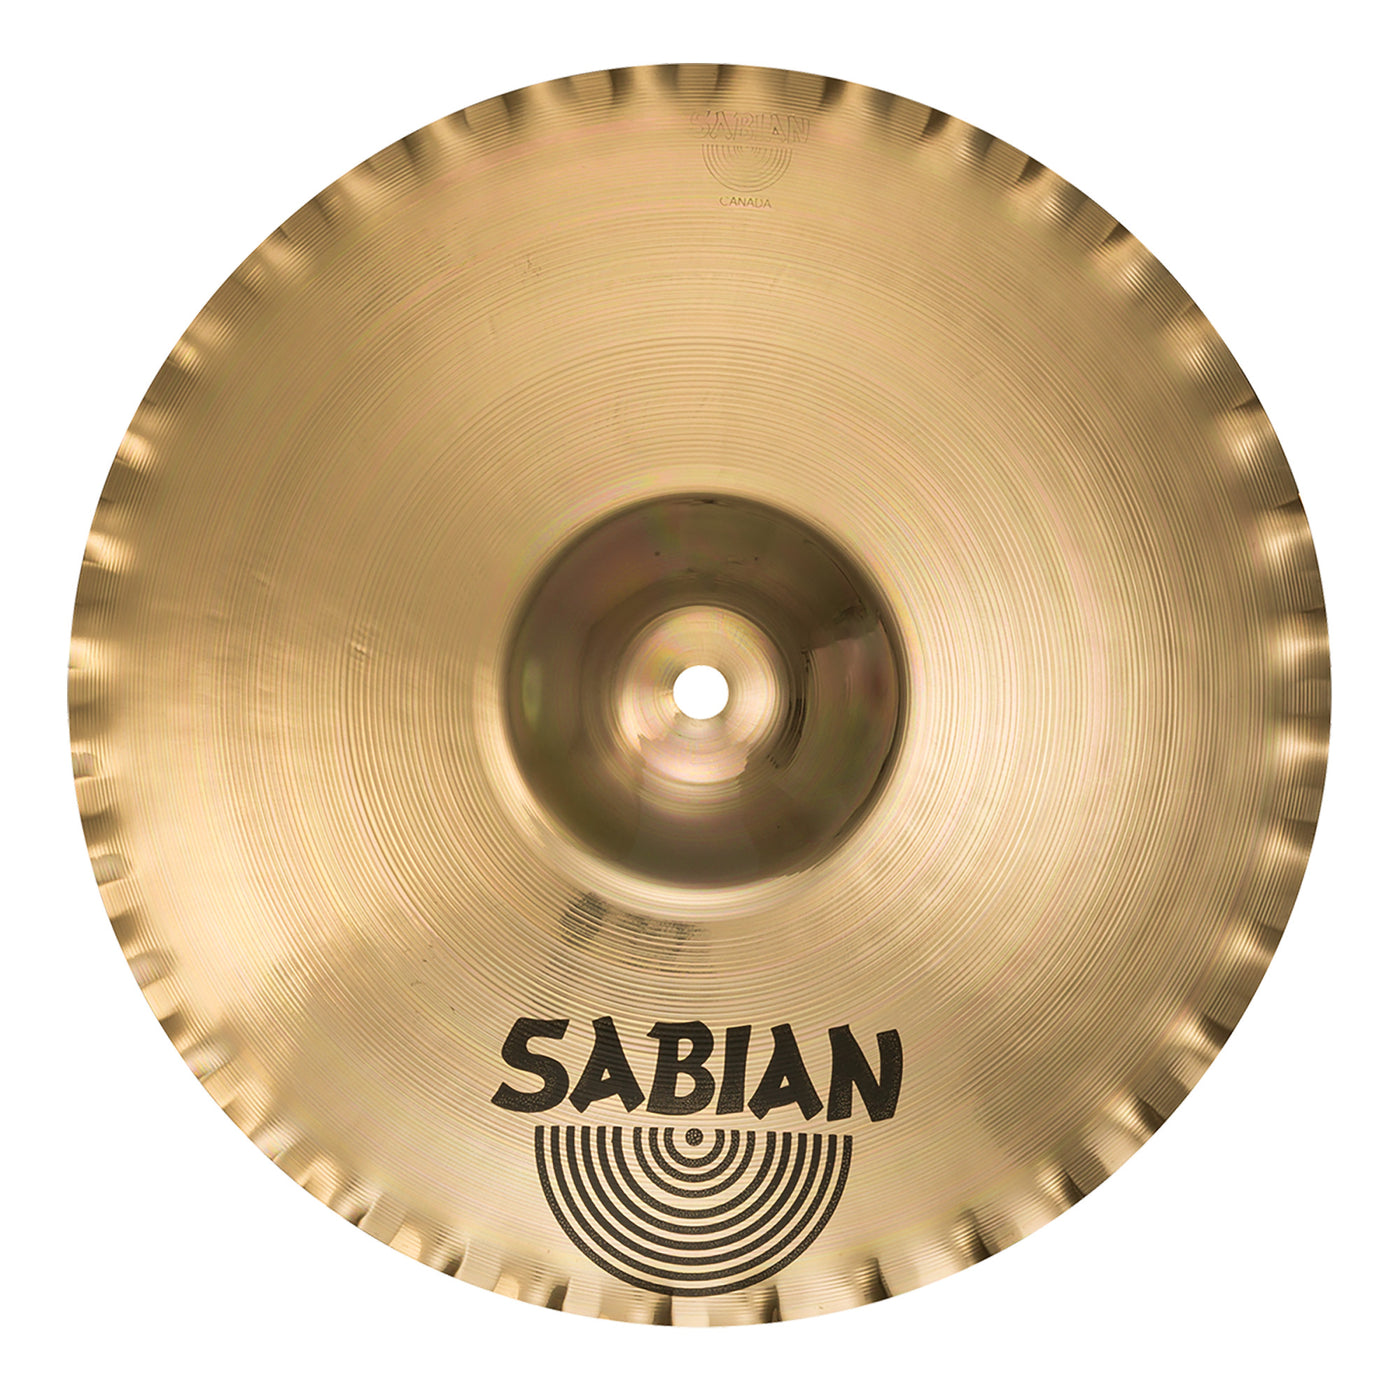 Sabian XSR Fast Stax Cymbal Stack